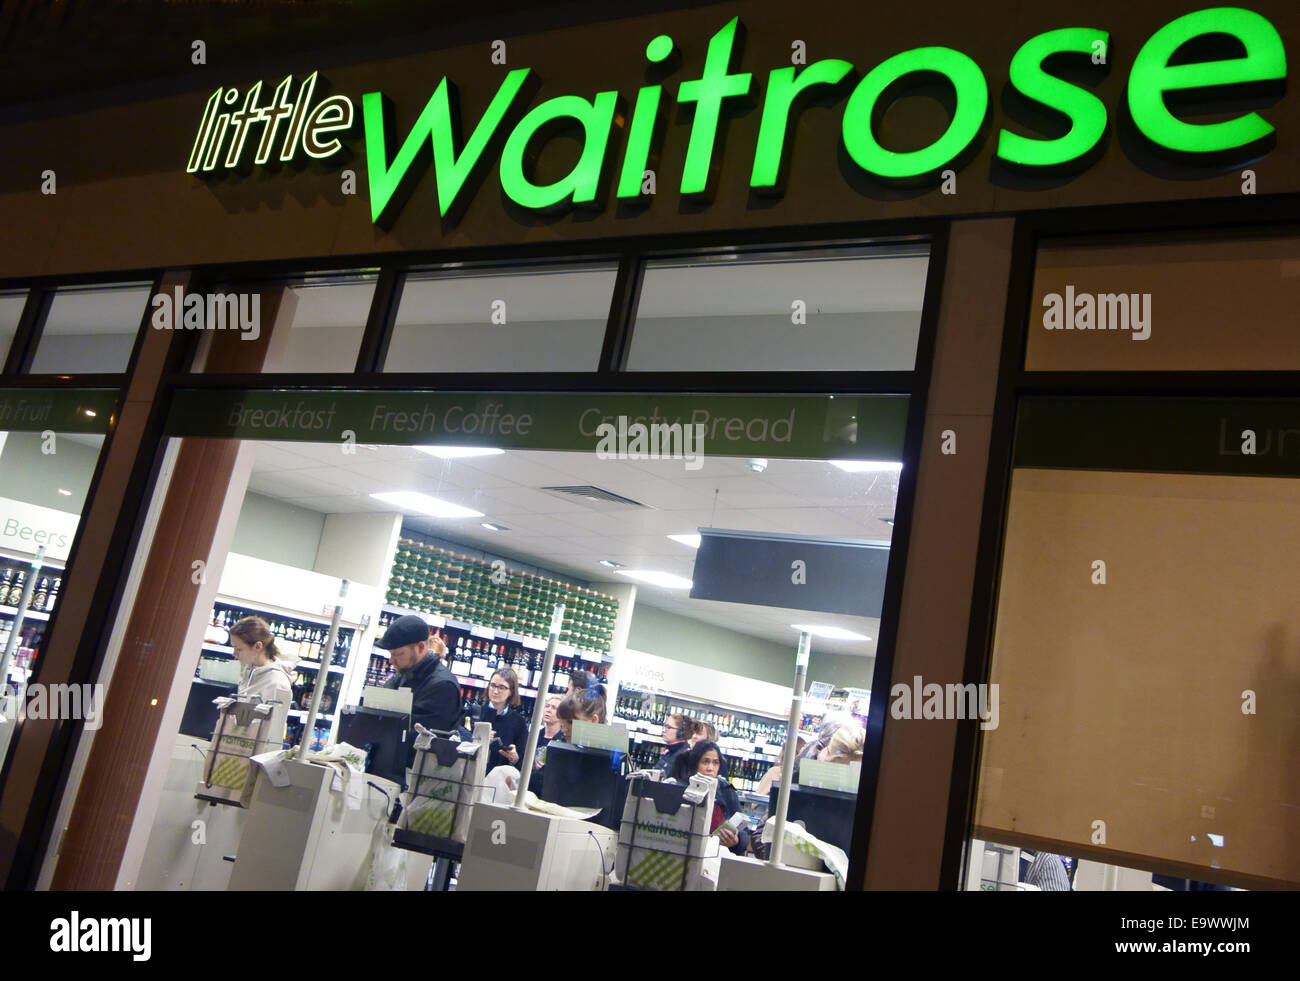 Branch of Little Waitrose supermarkets in London Stock Photo